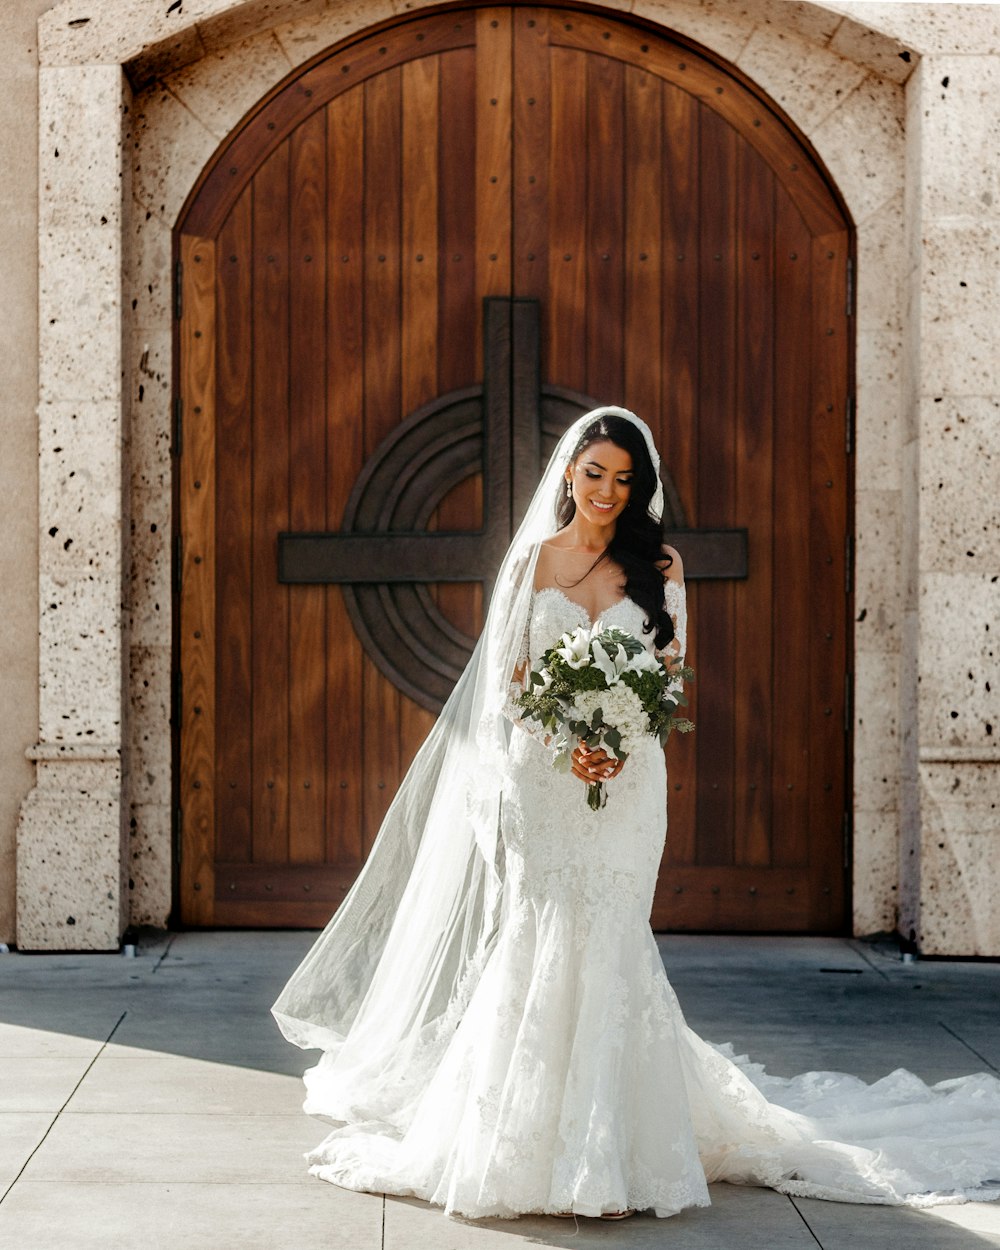 woman wearing wedding dress holding bouquet of flowers